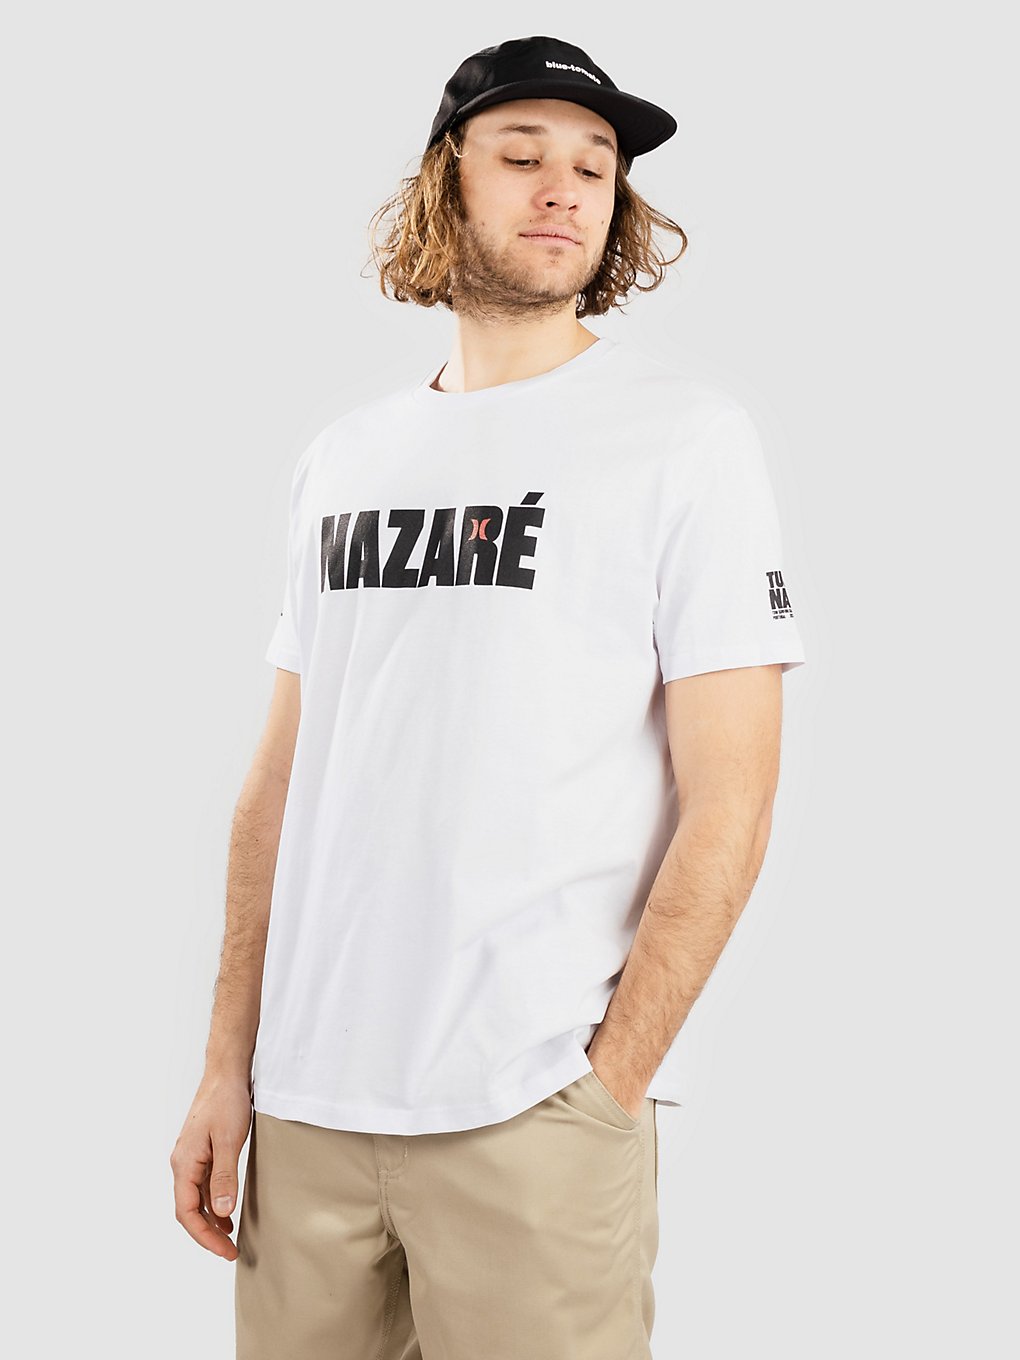 Hurley Nazare Solid T-Shirt white kaufen